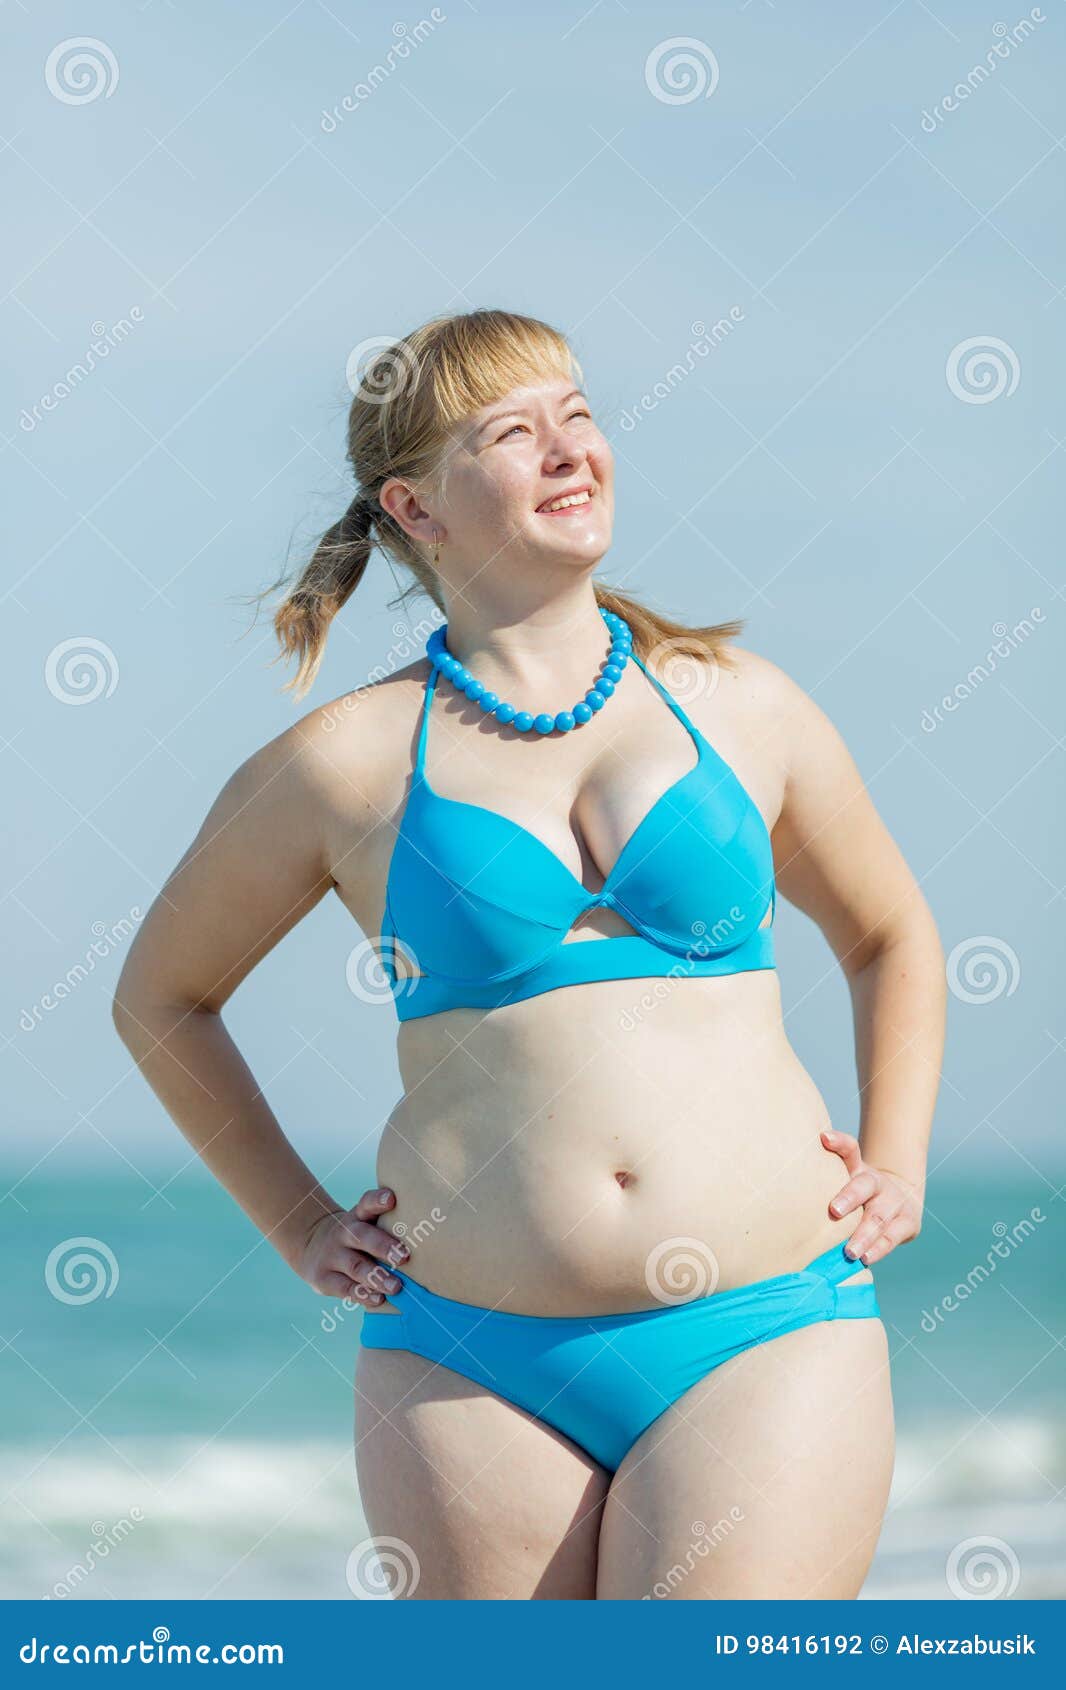 803 Middle Aged Woman Bikini Stock Photos picture